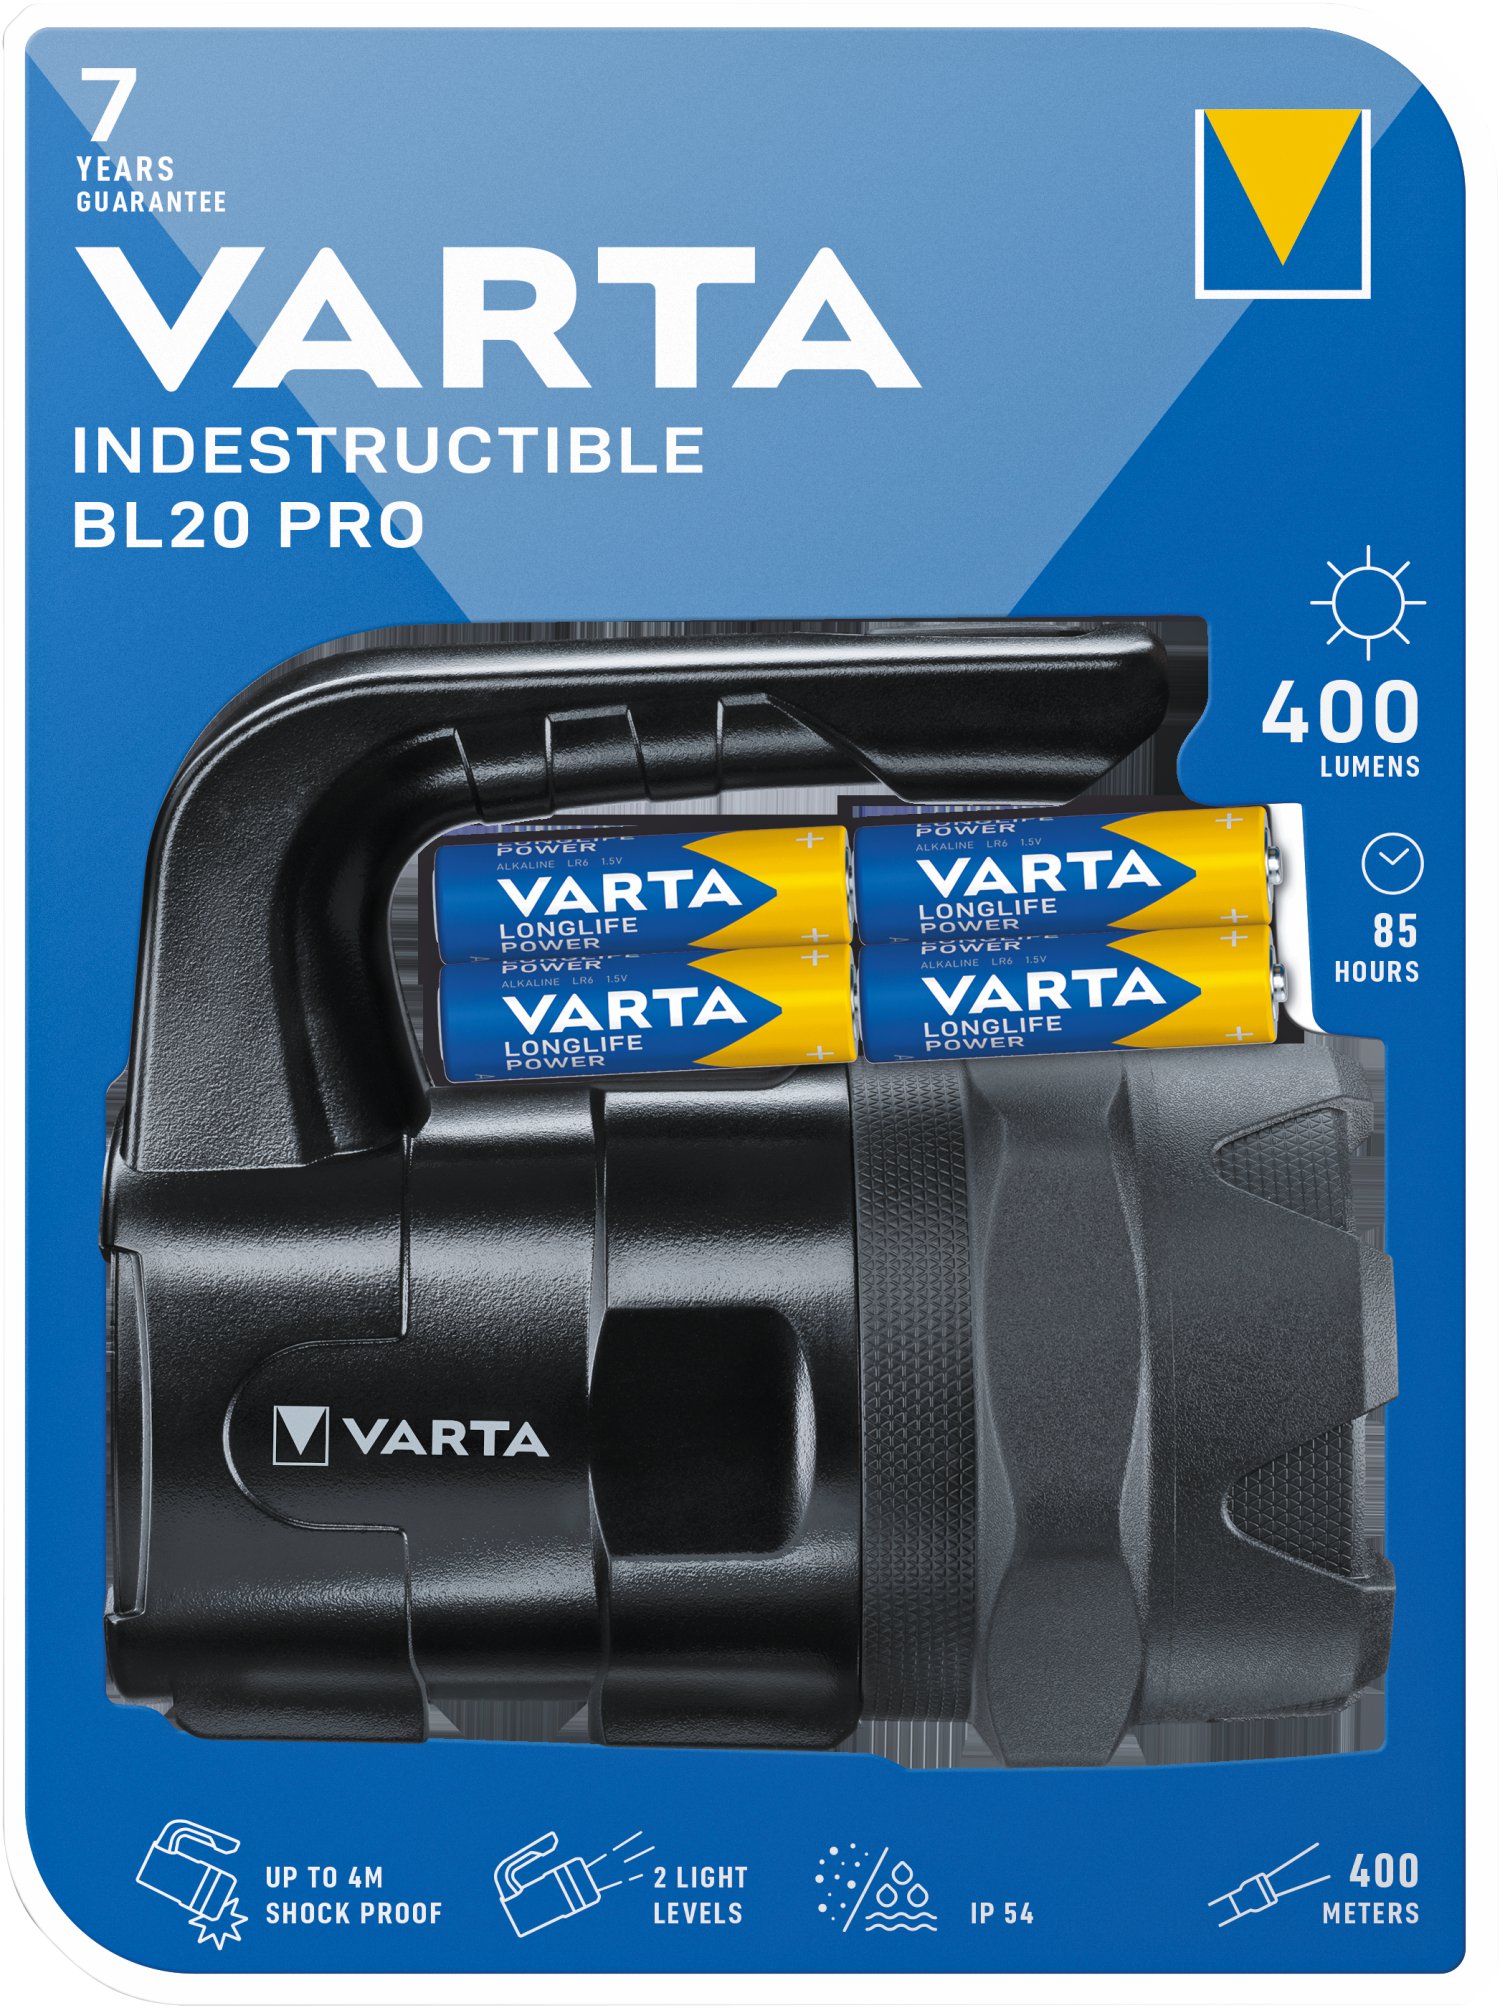 VARTA LED-Taschenlampe Indestructible BL20 Pro inkl. 6x VARTA Longlife Power AA Batterie